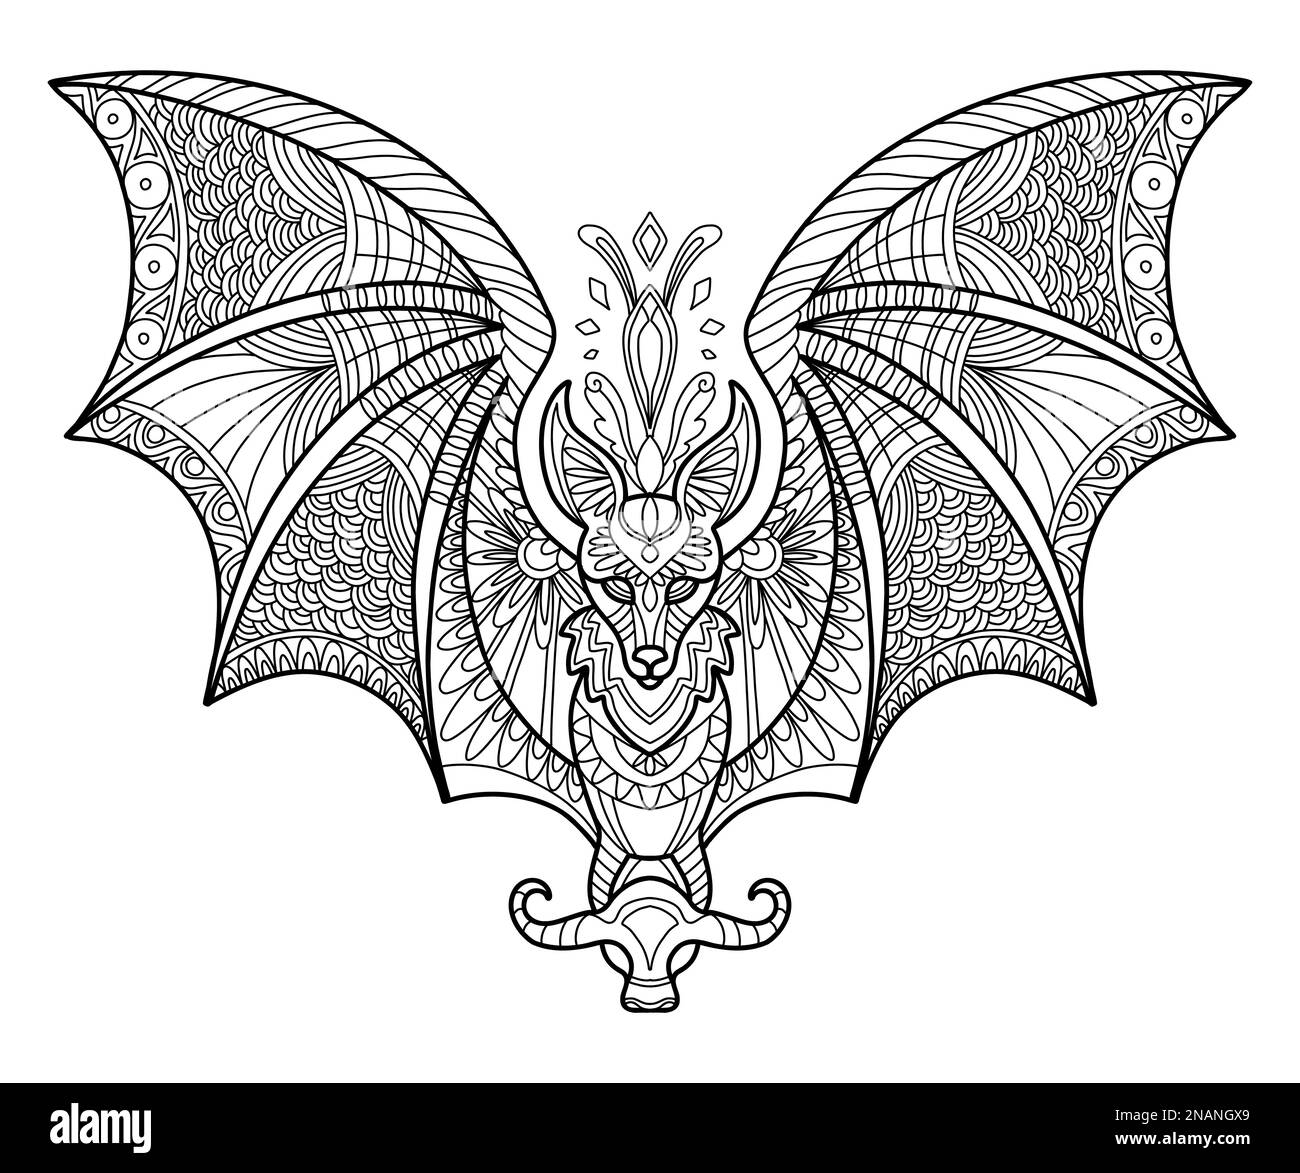 Stylized bat close up. Hand drawn sketch black contour vector illustration. For adult antistress coloring page, print, design, decor, T-shirt, emblem, Stock Vector